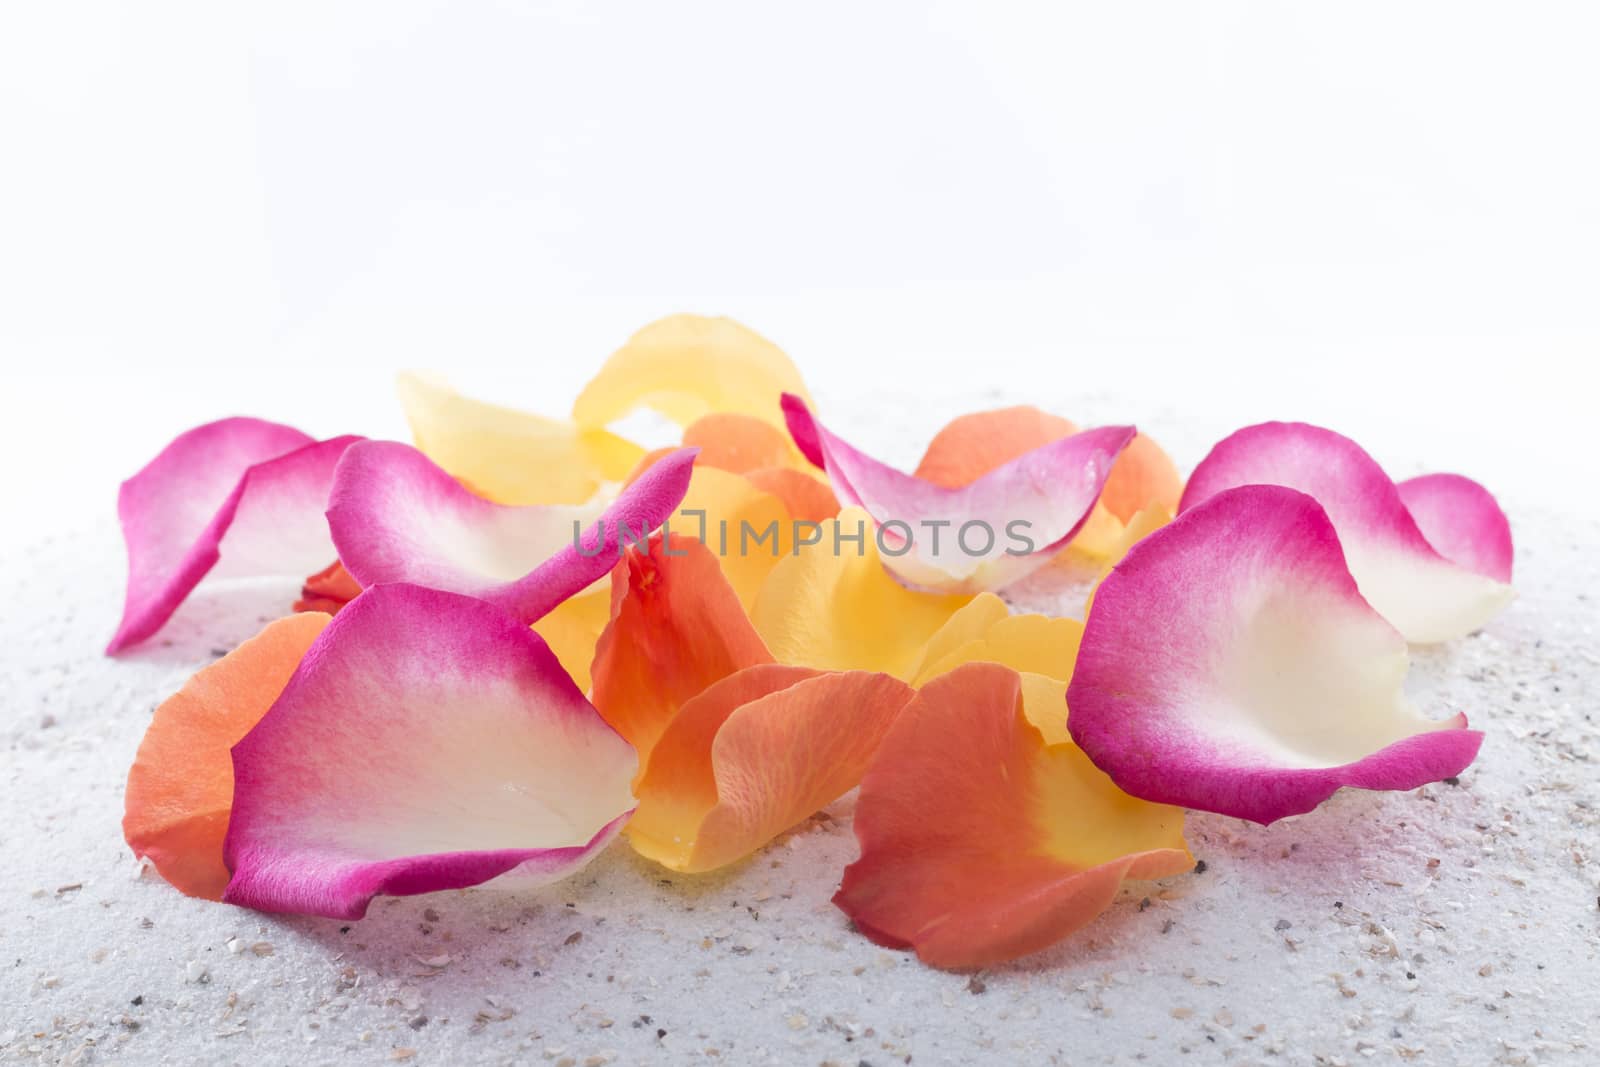 Rose petals by avanheertum